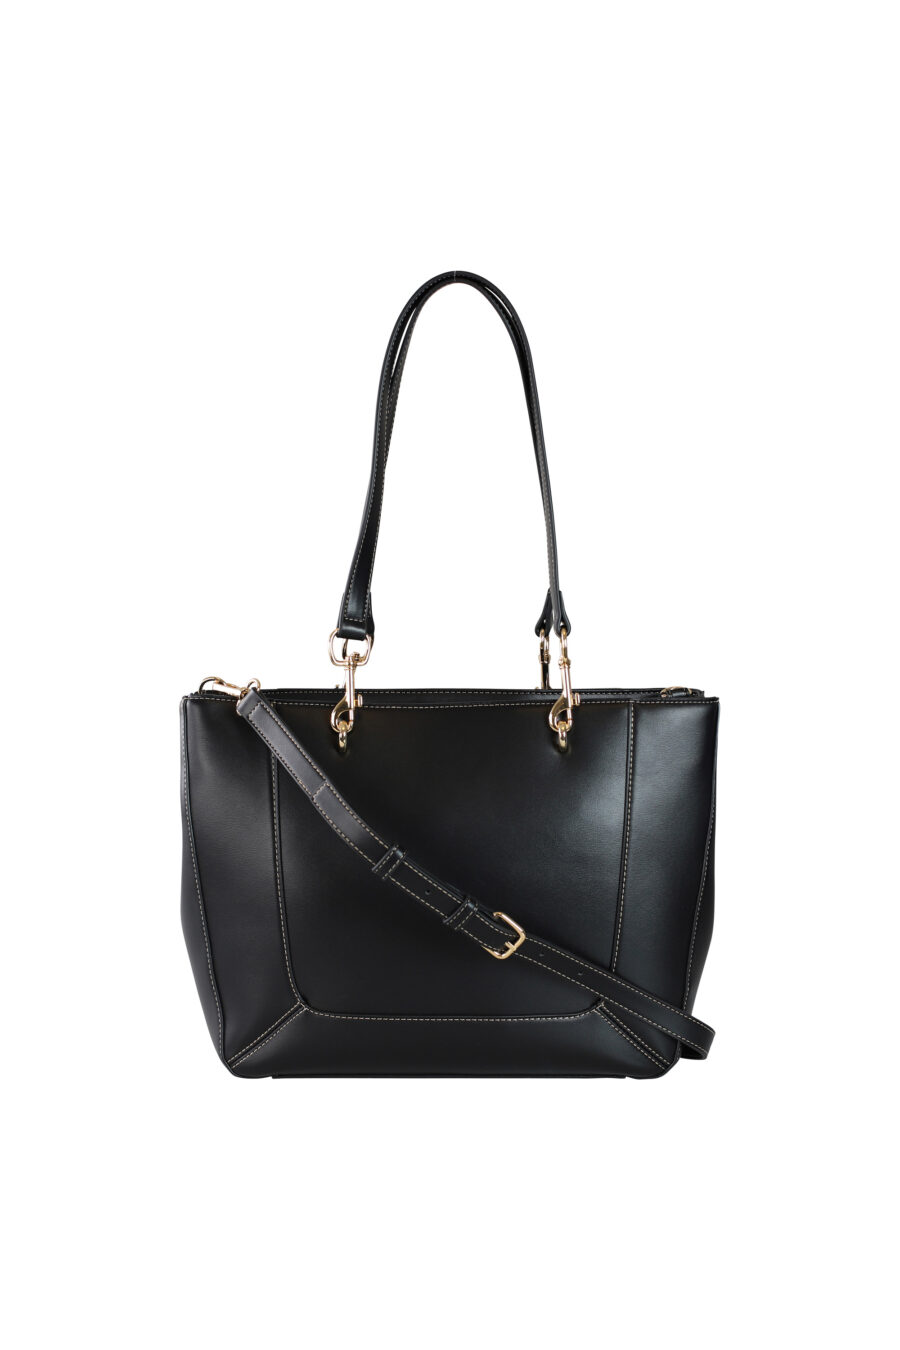 Black shopper bag with front pocket and mini logo - 8059965779126 3